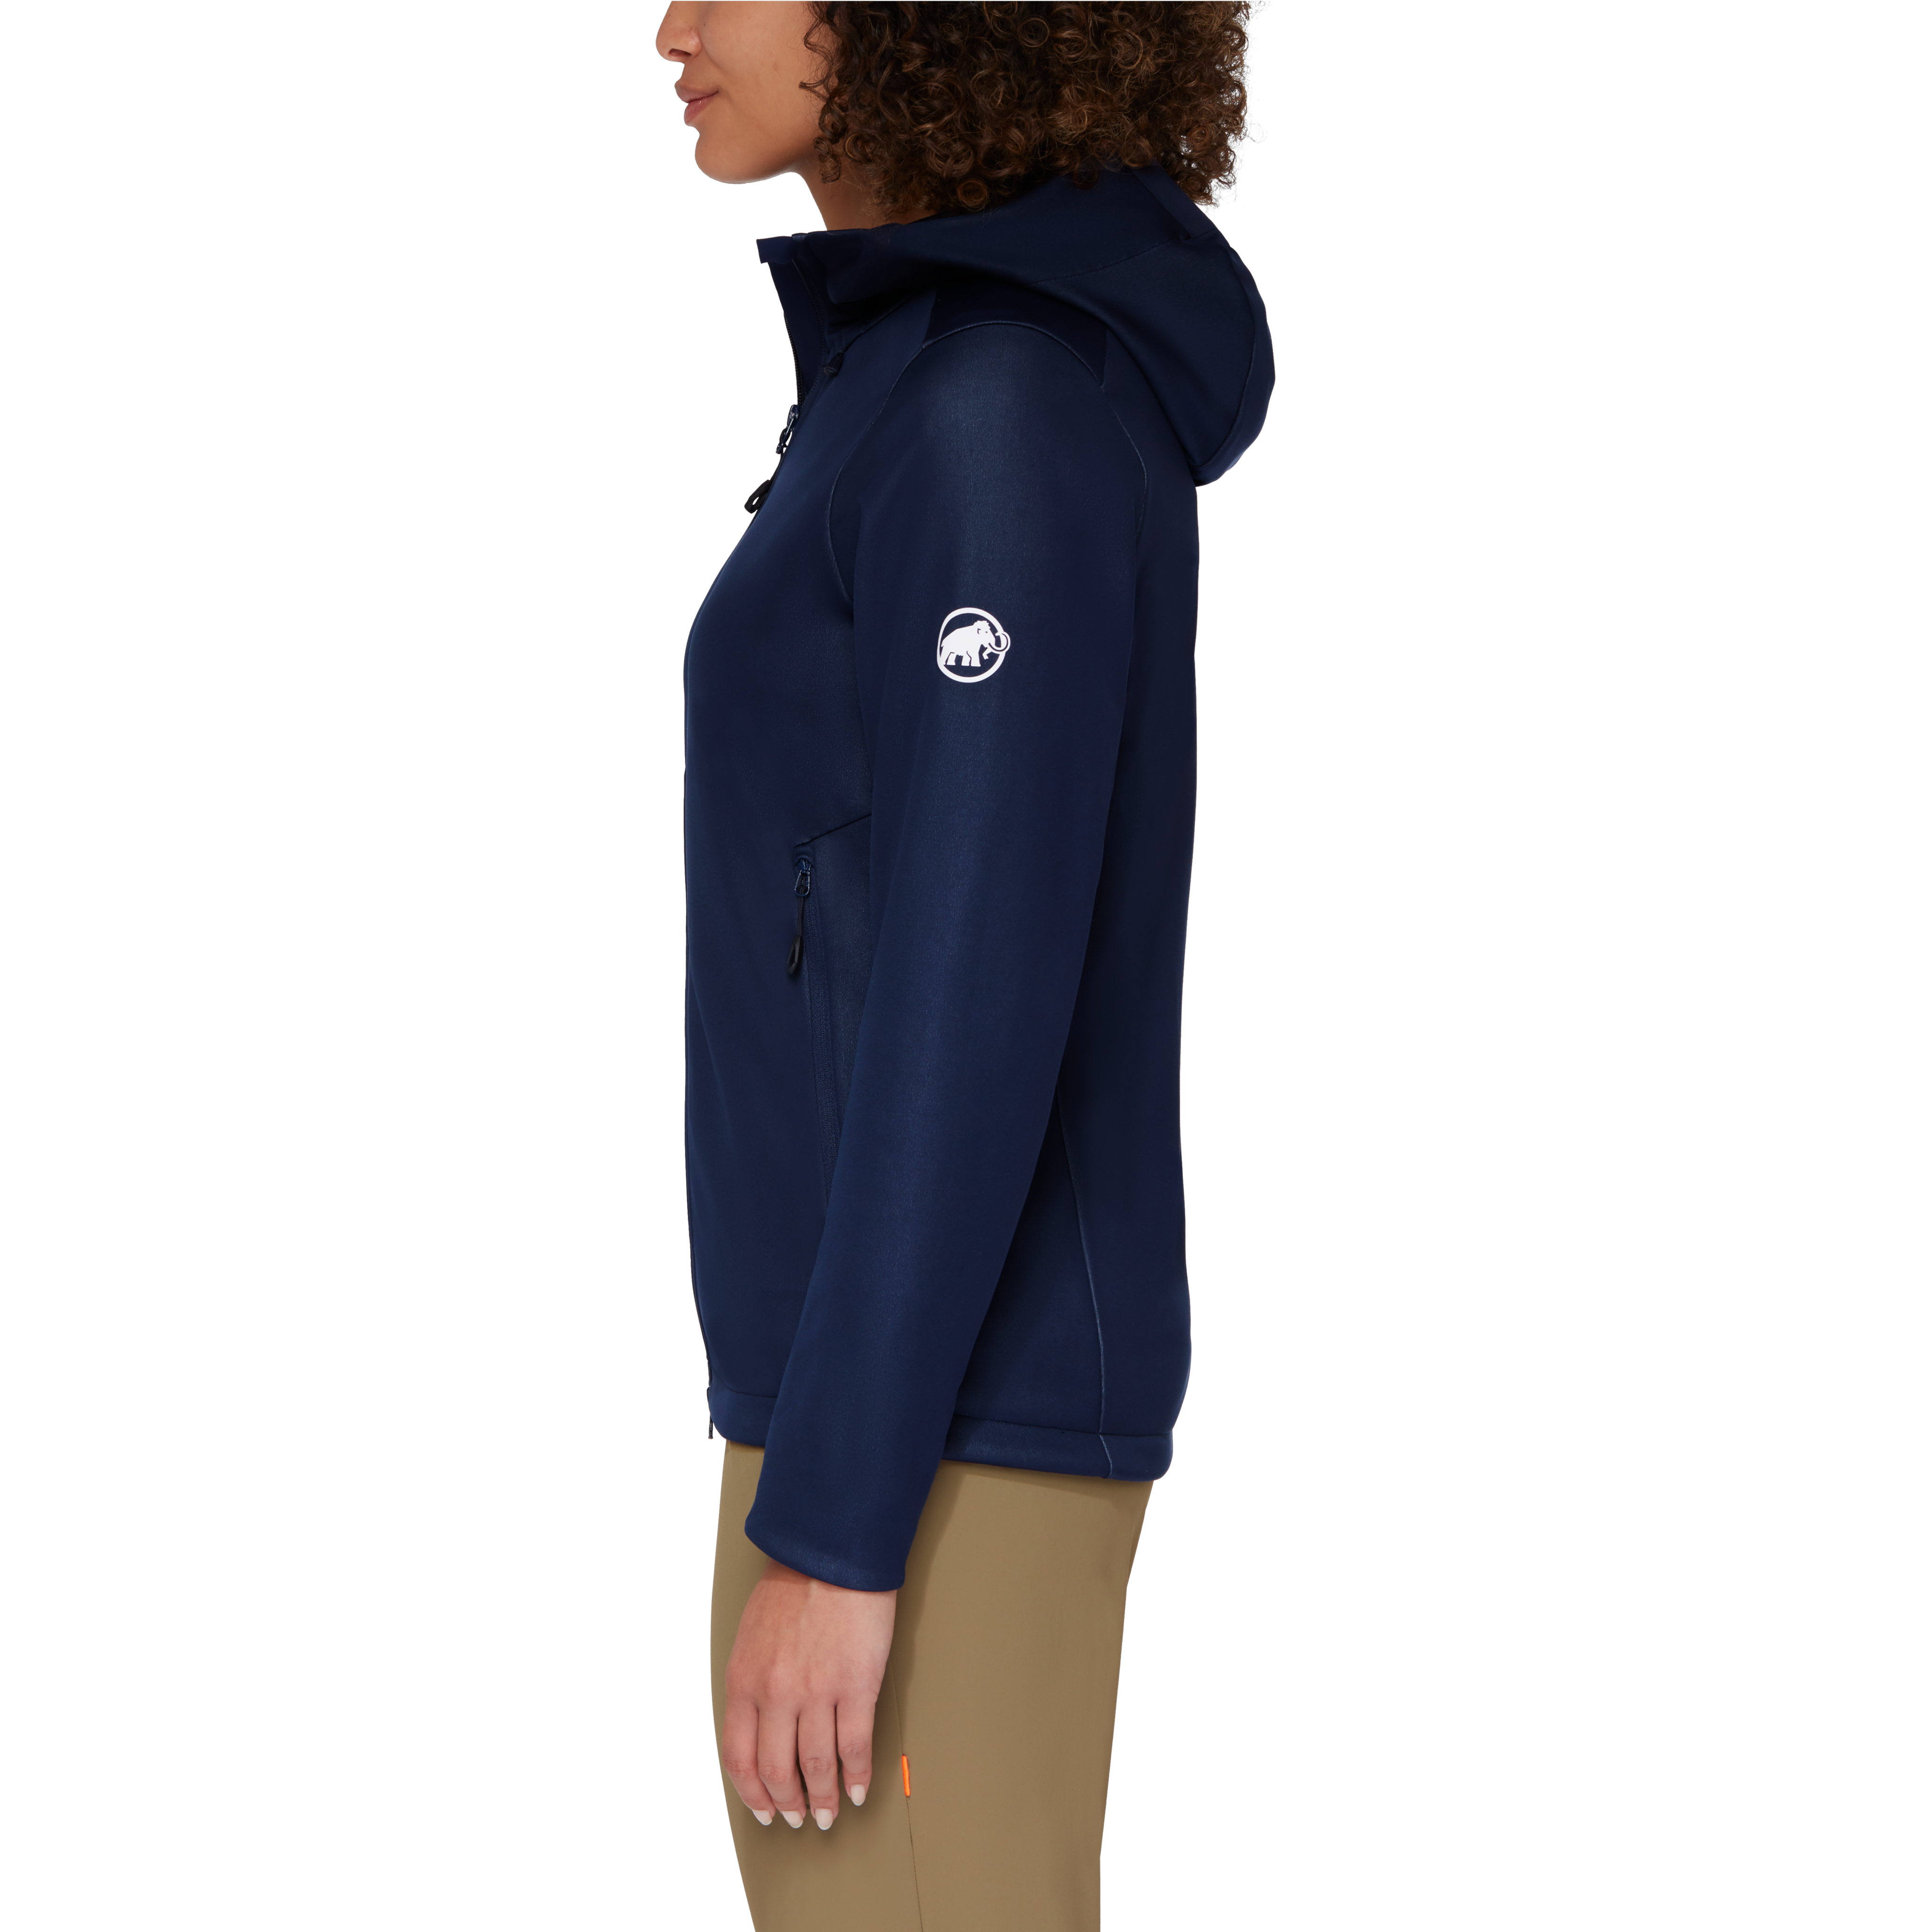 Ultimate VII SO Hooded Jacket Women product image